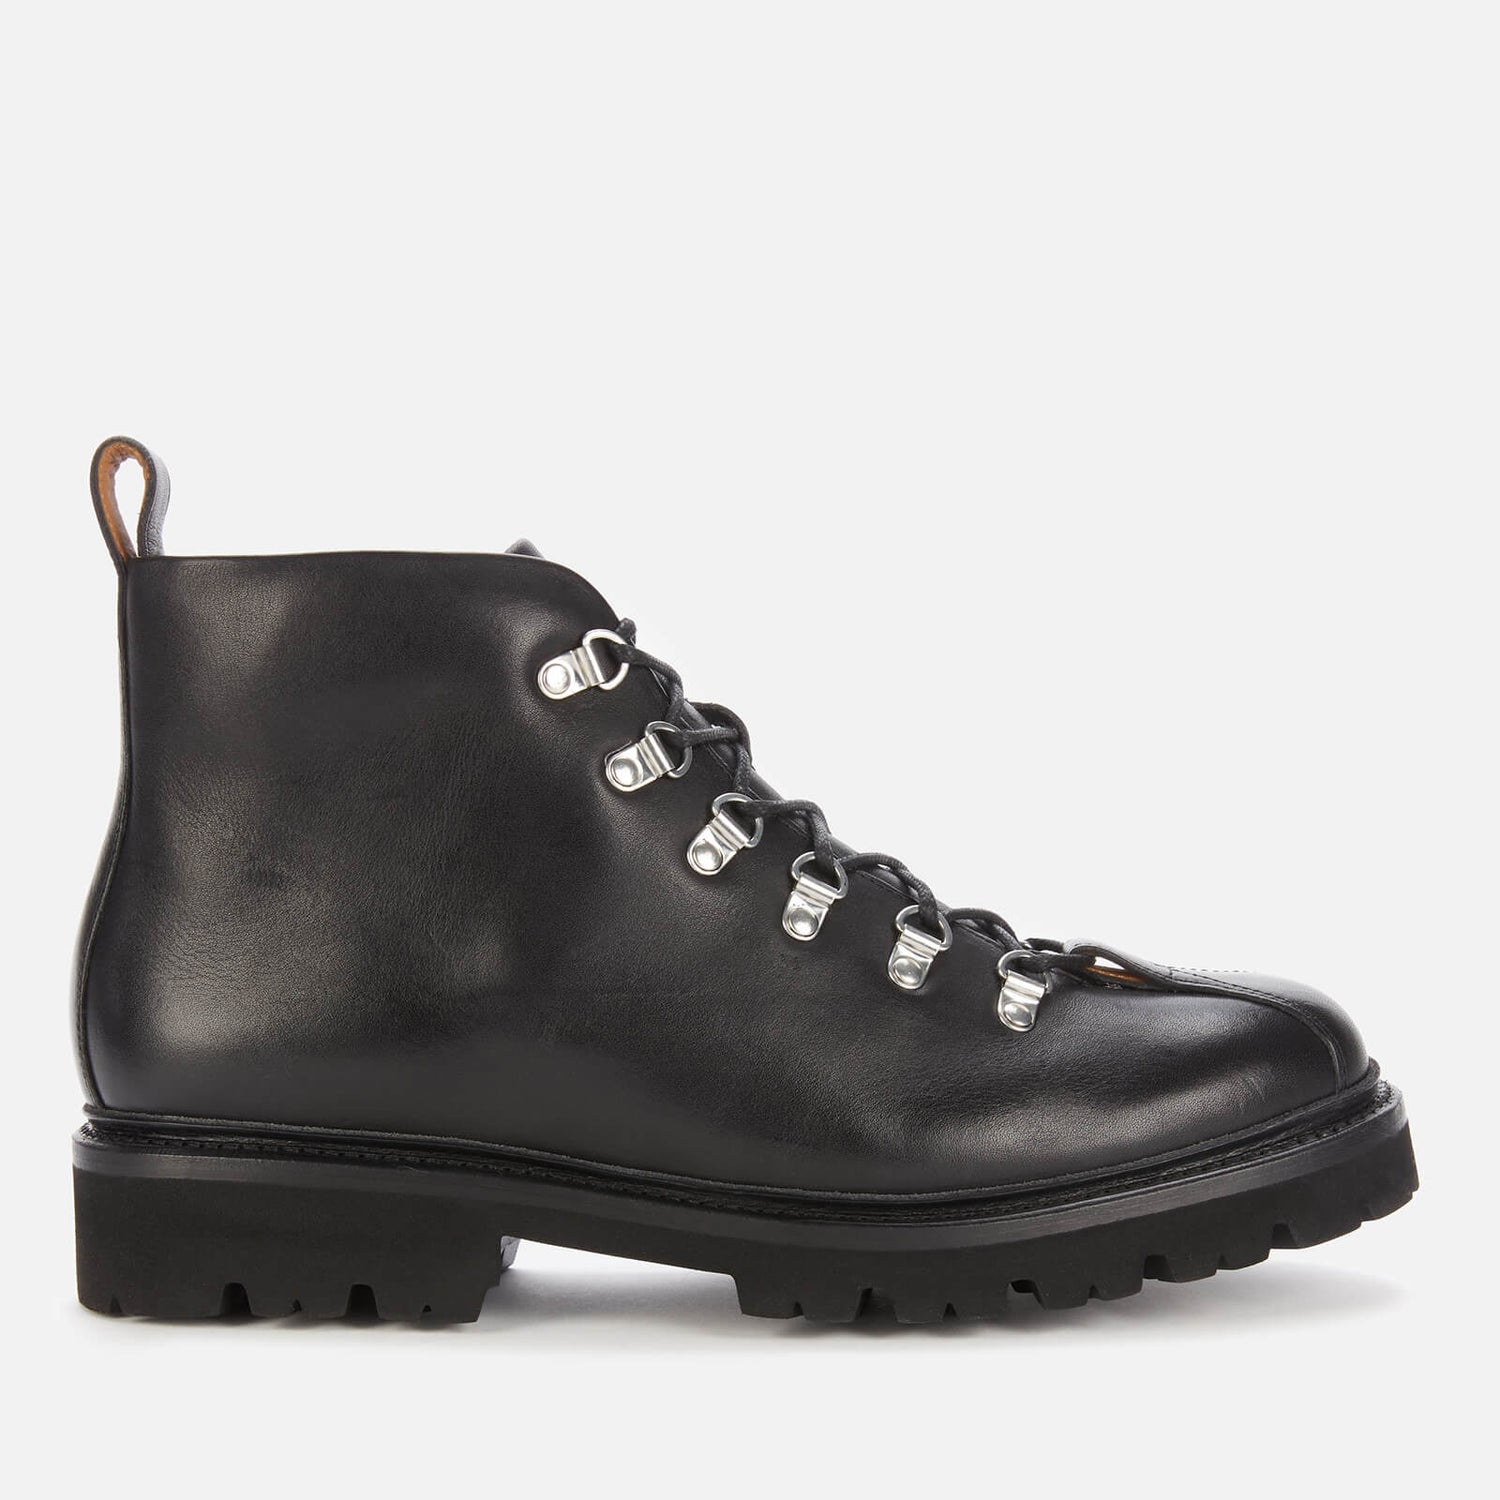 Grenson Men's Bobby Leather Hiking Style Boots - Black | FREE UK ...